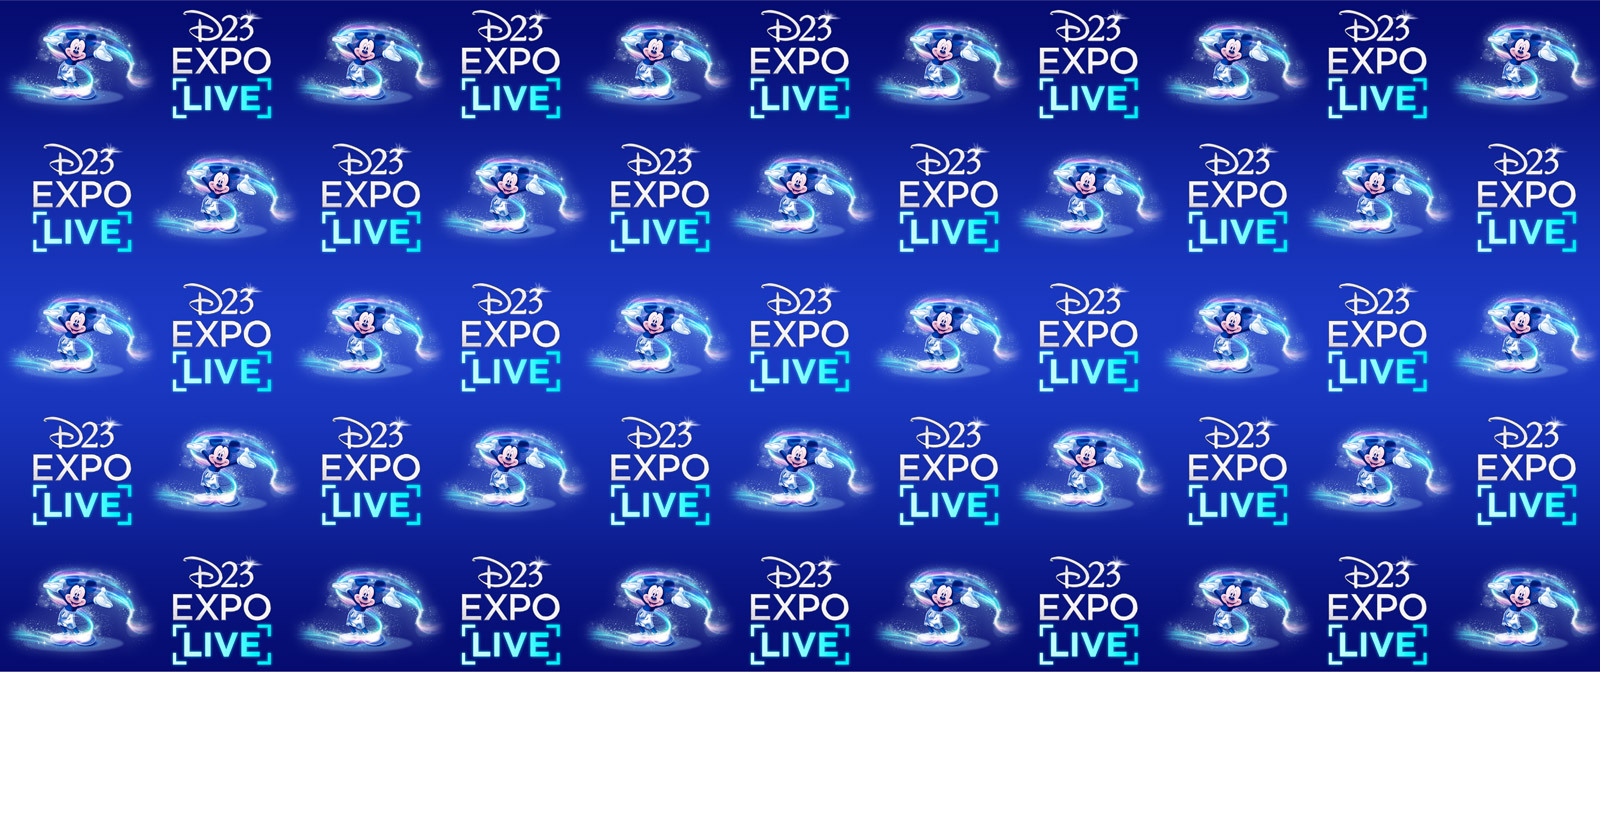 d23 expo 2021 live stream